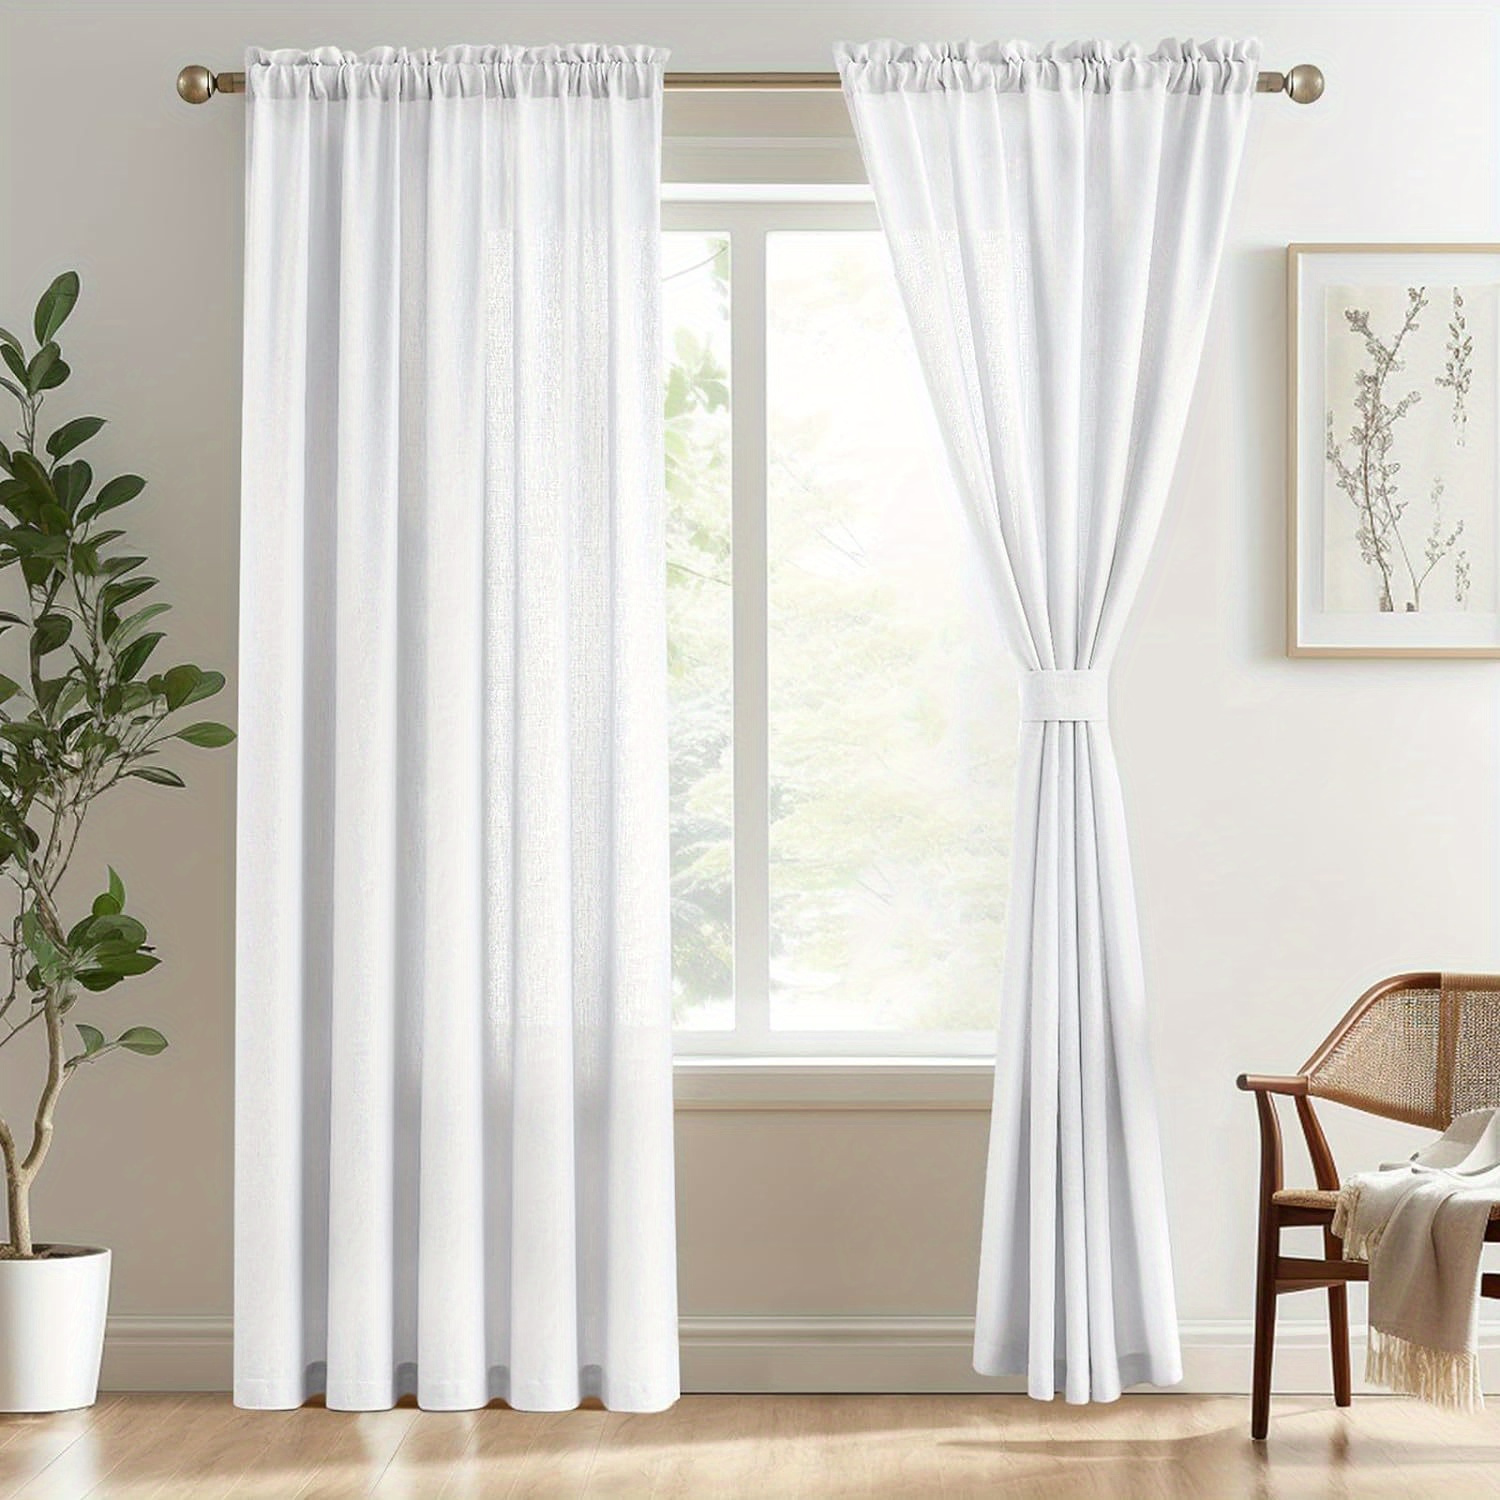 

2pcs White Linen Look Sheer Drapes Rod Pocket Semi Sheer Curtains Light Filtering Privacy Curtains For Bedroom, Living Room, Farmhouse Decor